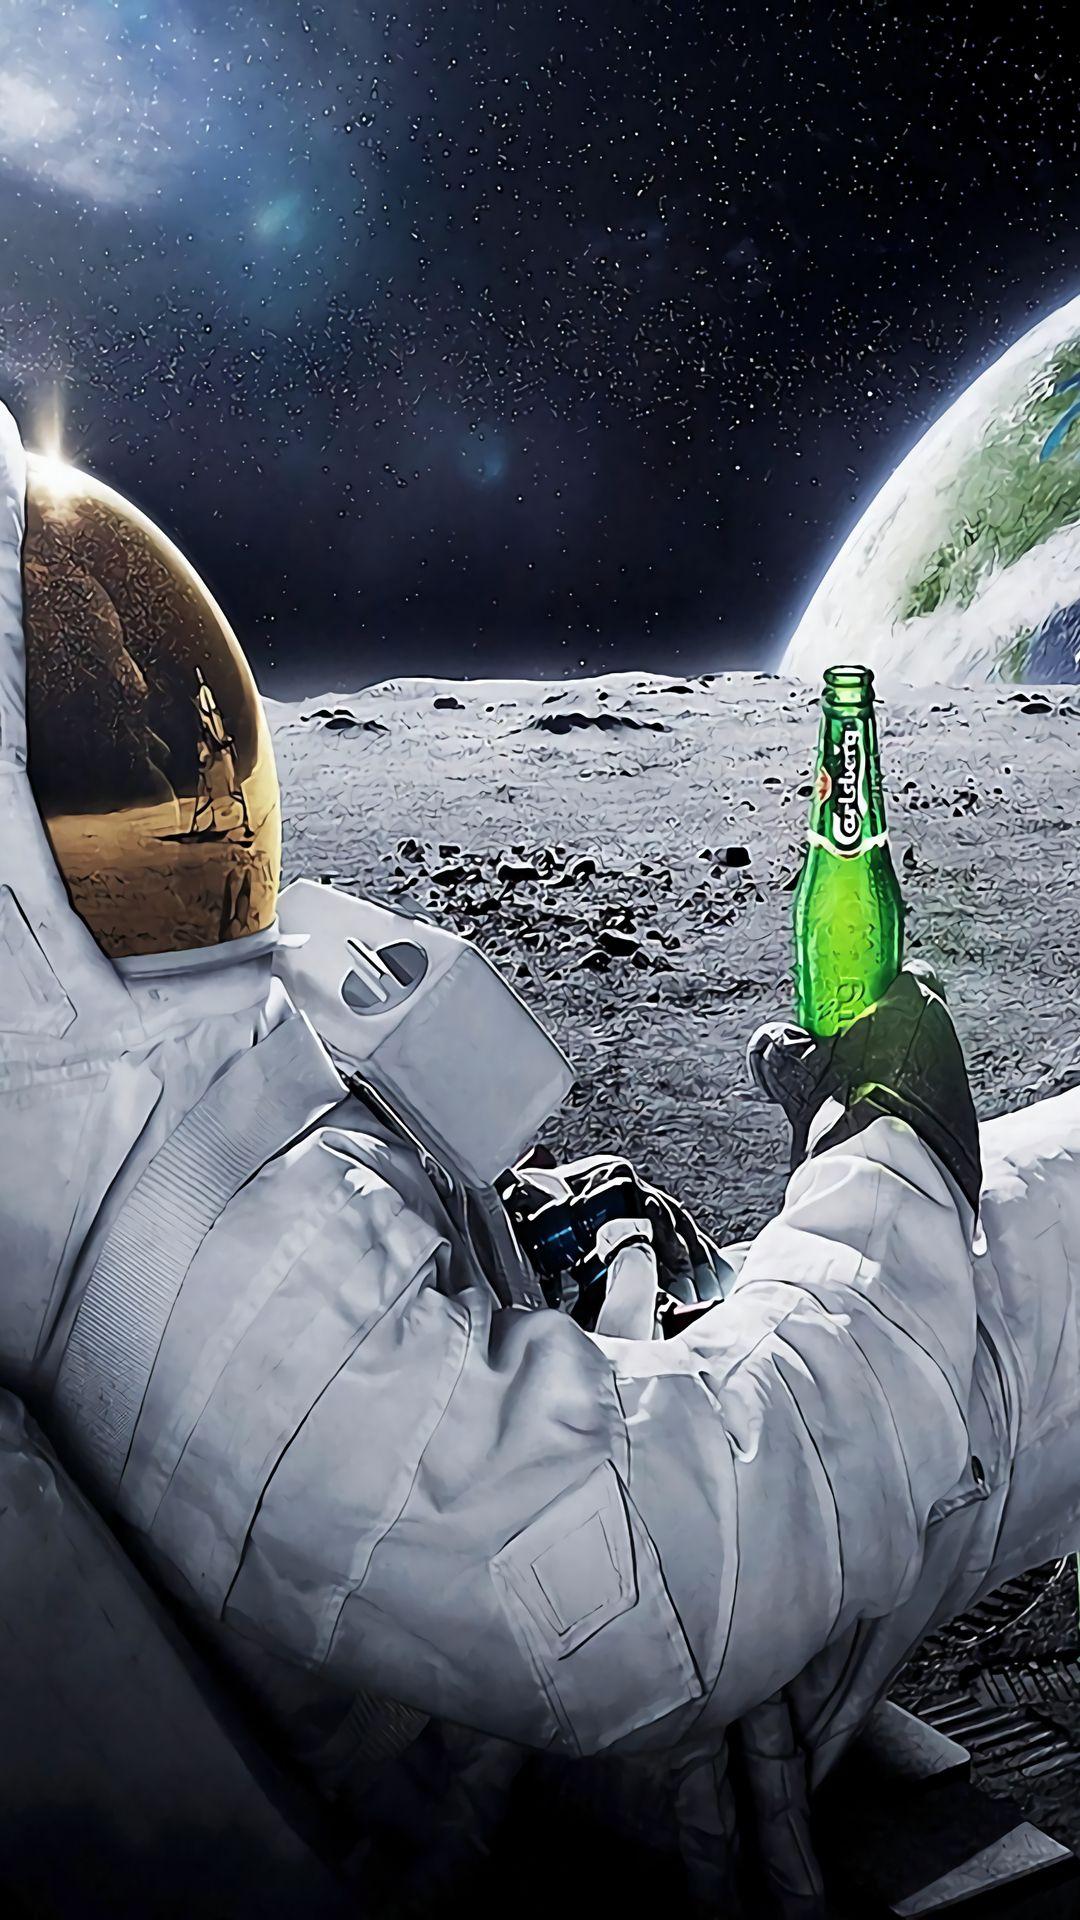 Astronaut Drinking Beer Wallpapers - Top Free Astronaut Drinking Beer